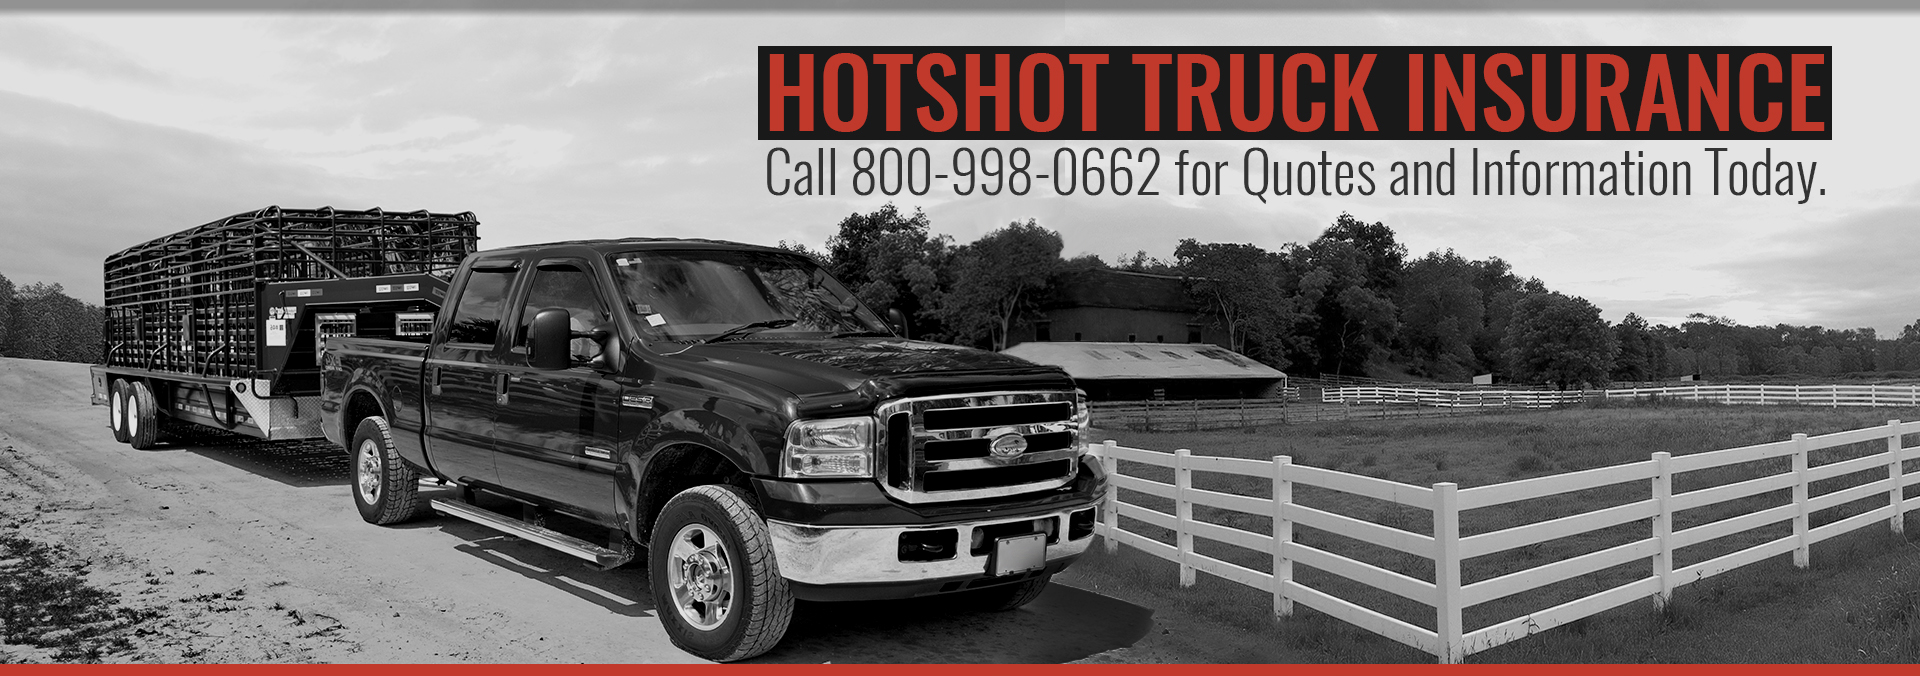 Hot Shot Truck Insurance Pennsylvania